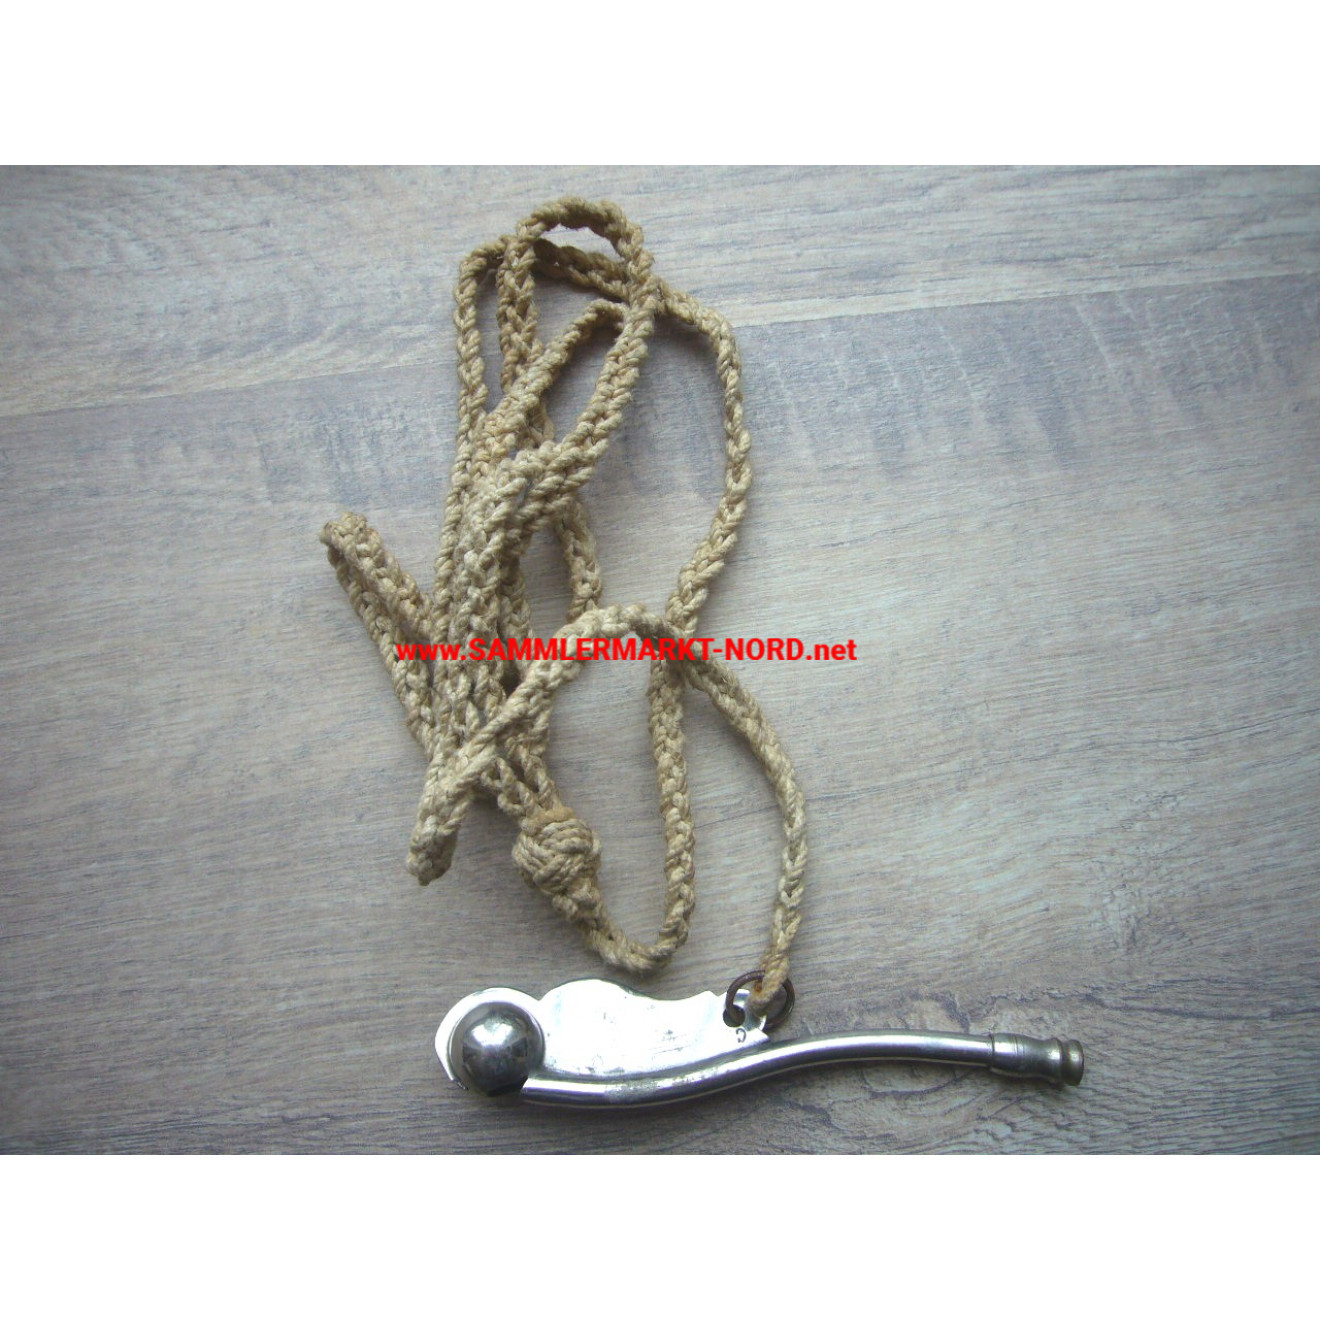 Kriegsmarine - Boatswain's whistle with long cord